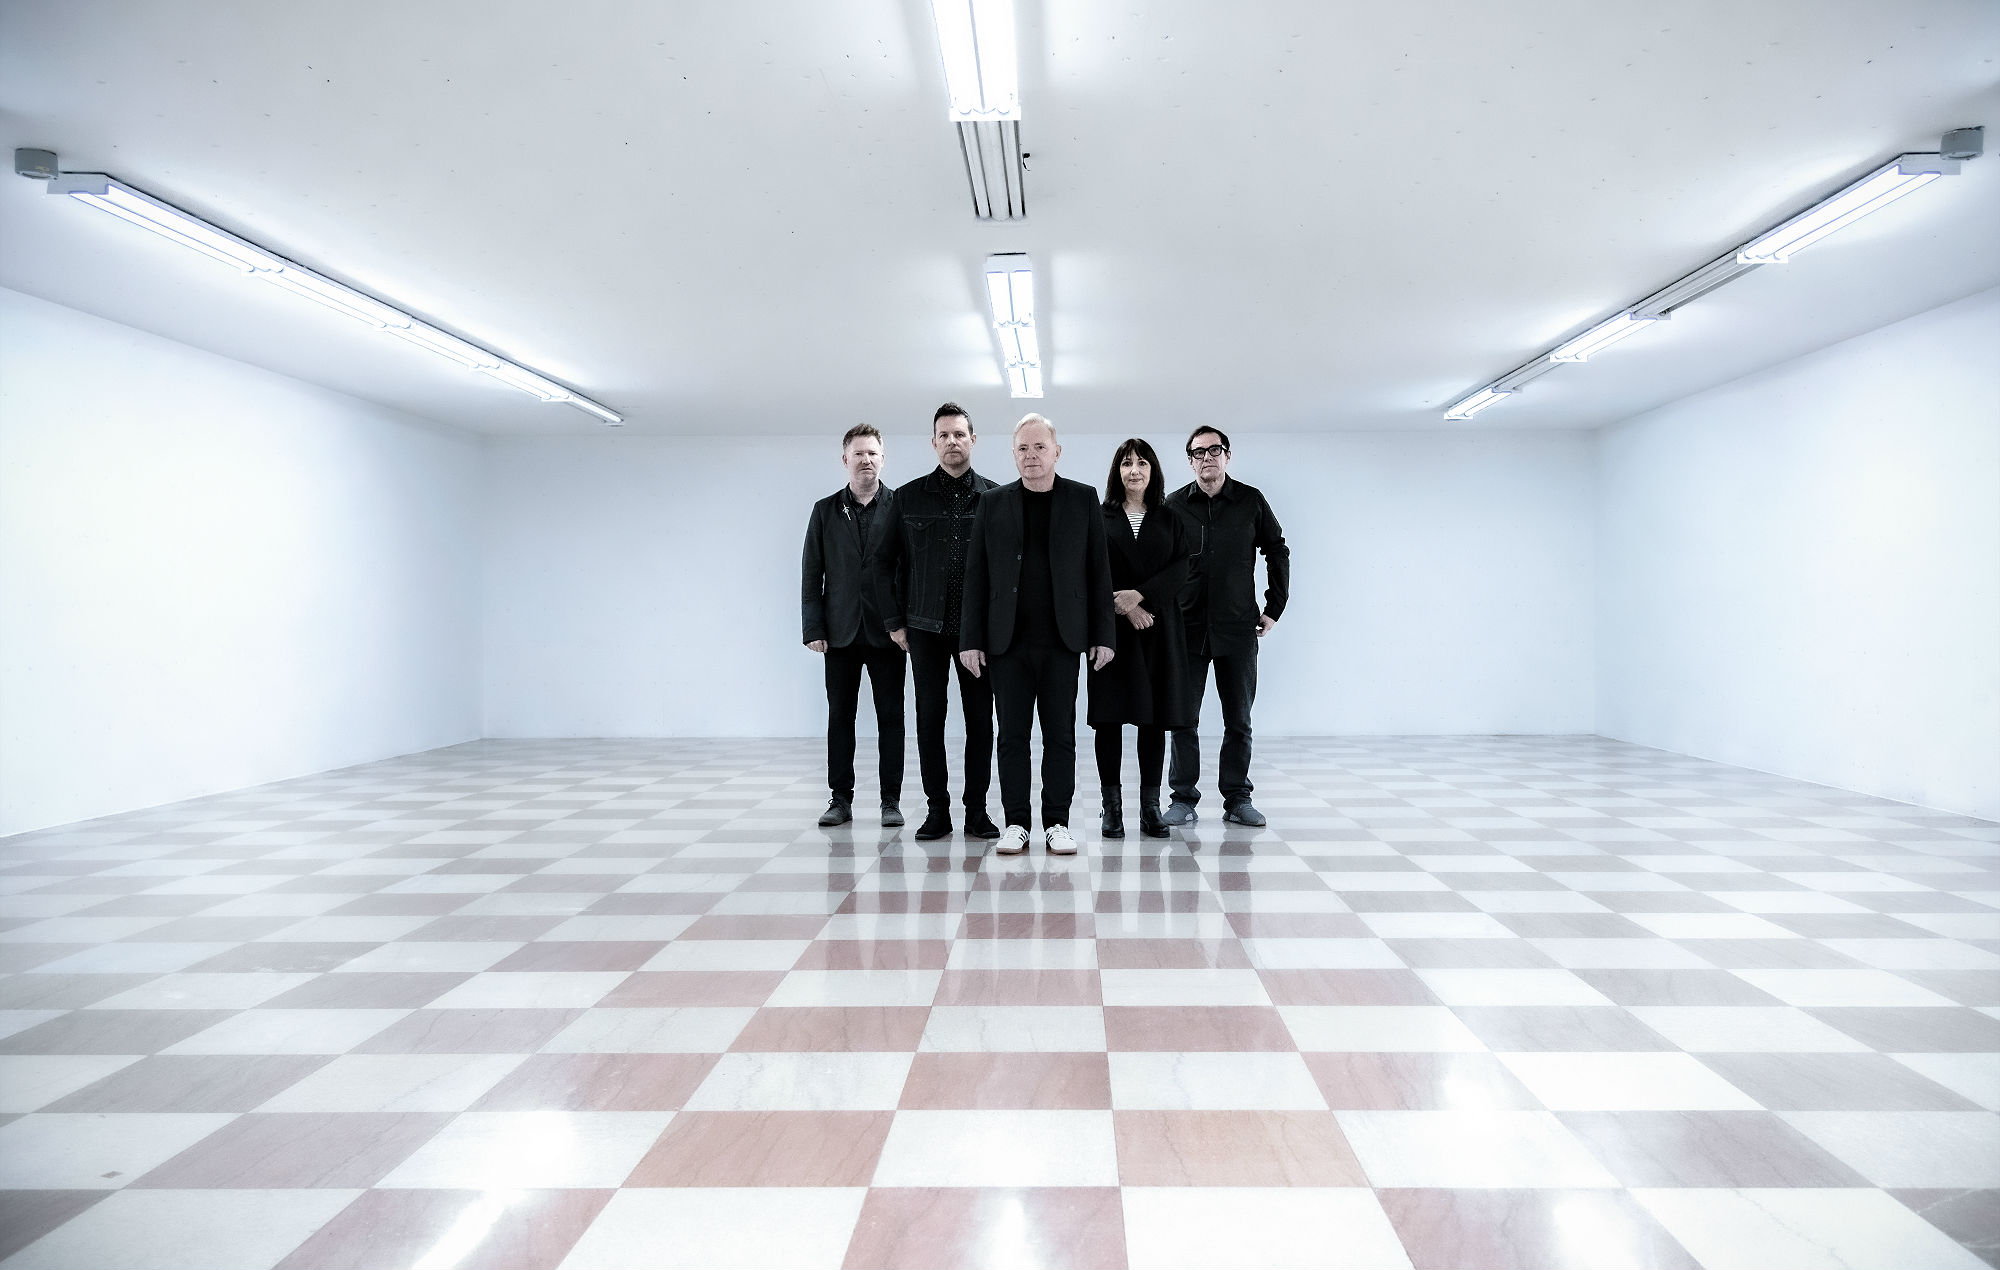 Escuchen el nuevo single celestial de New Order 'Be A Rebel'.